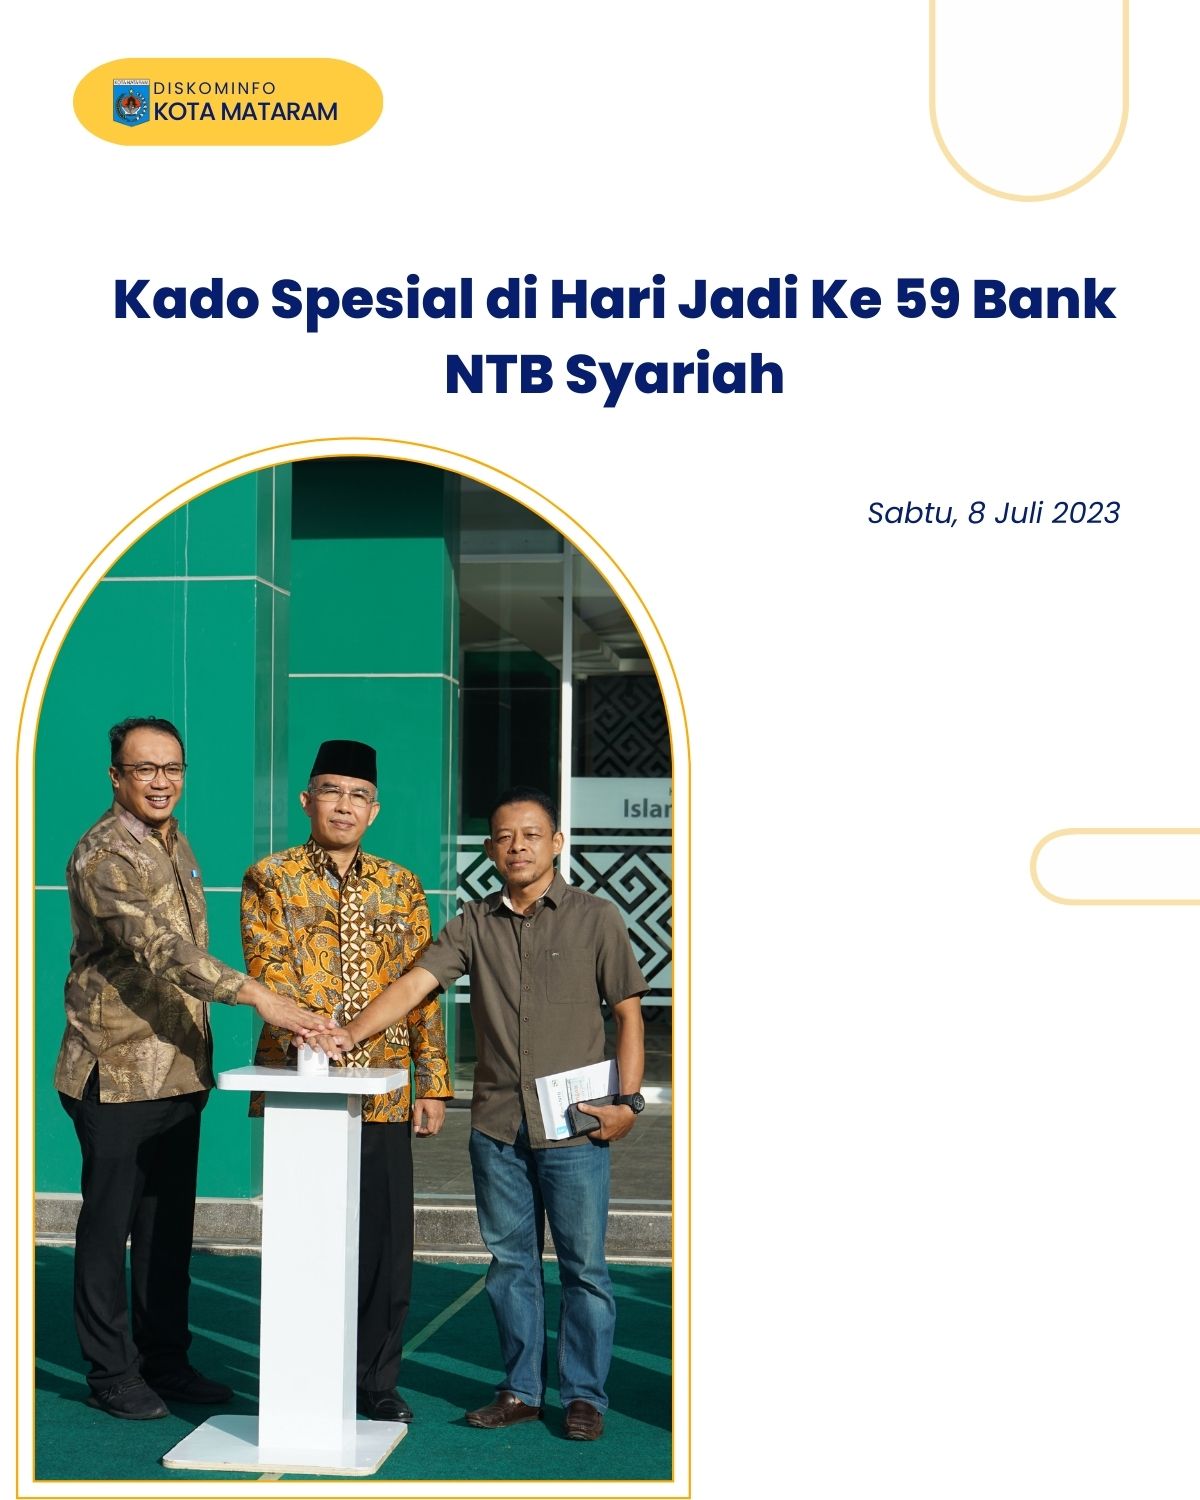 Kado Spesial di Hari Jadi Ke 59 Bank NTB Syariah